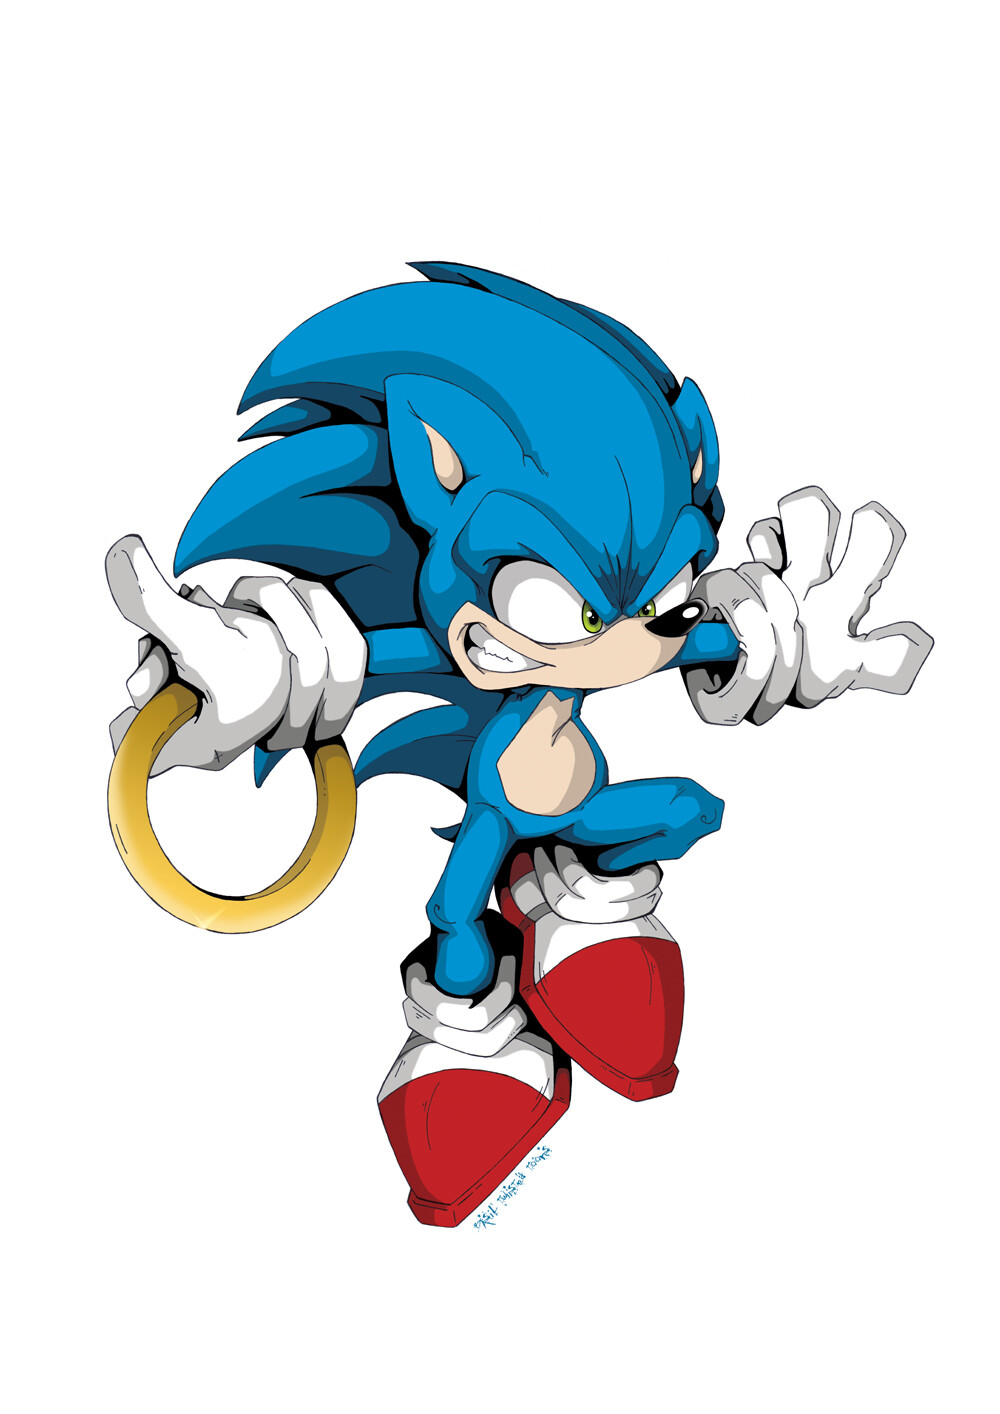 ArtStation - Sonic the Hedgehog cartoon